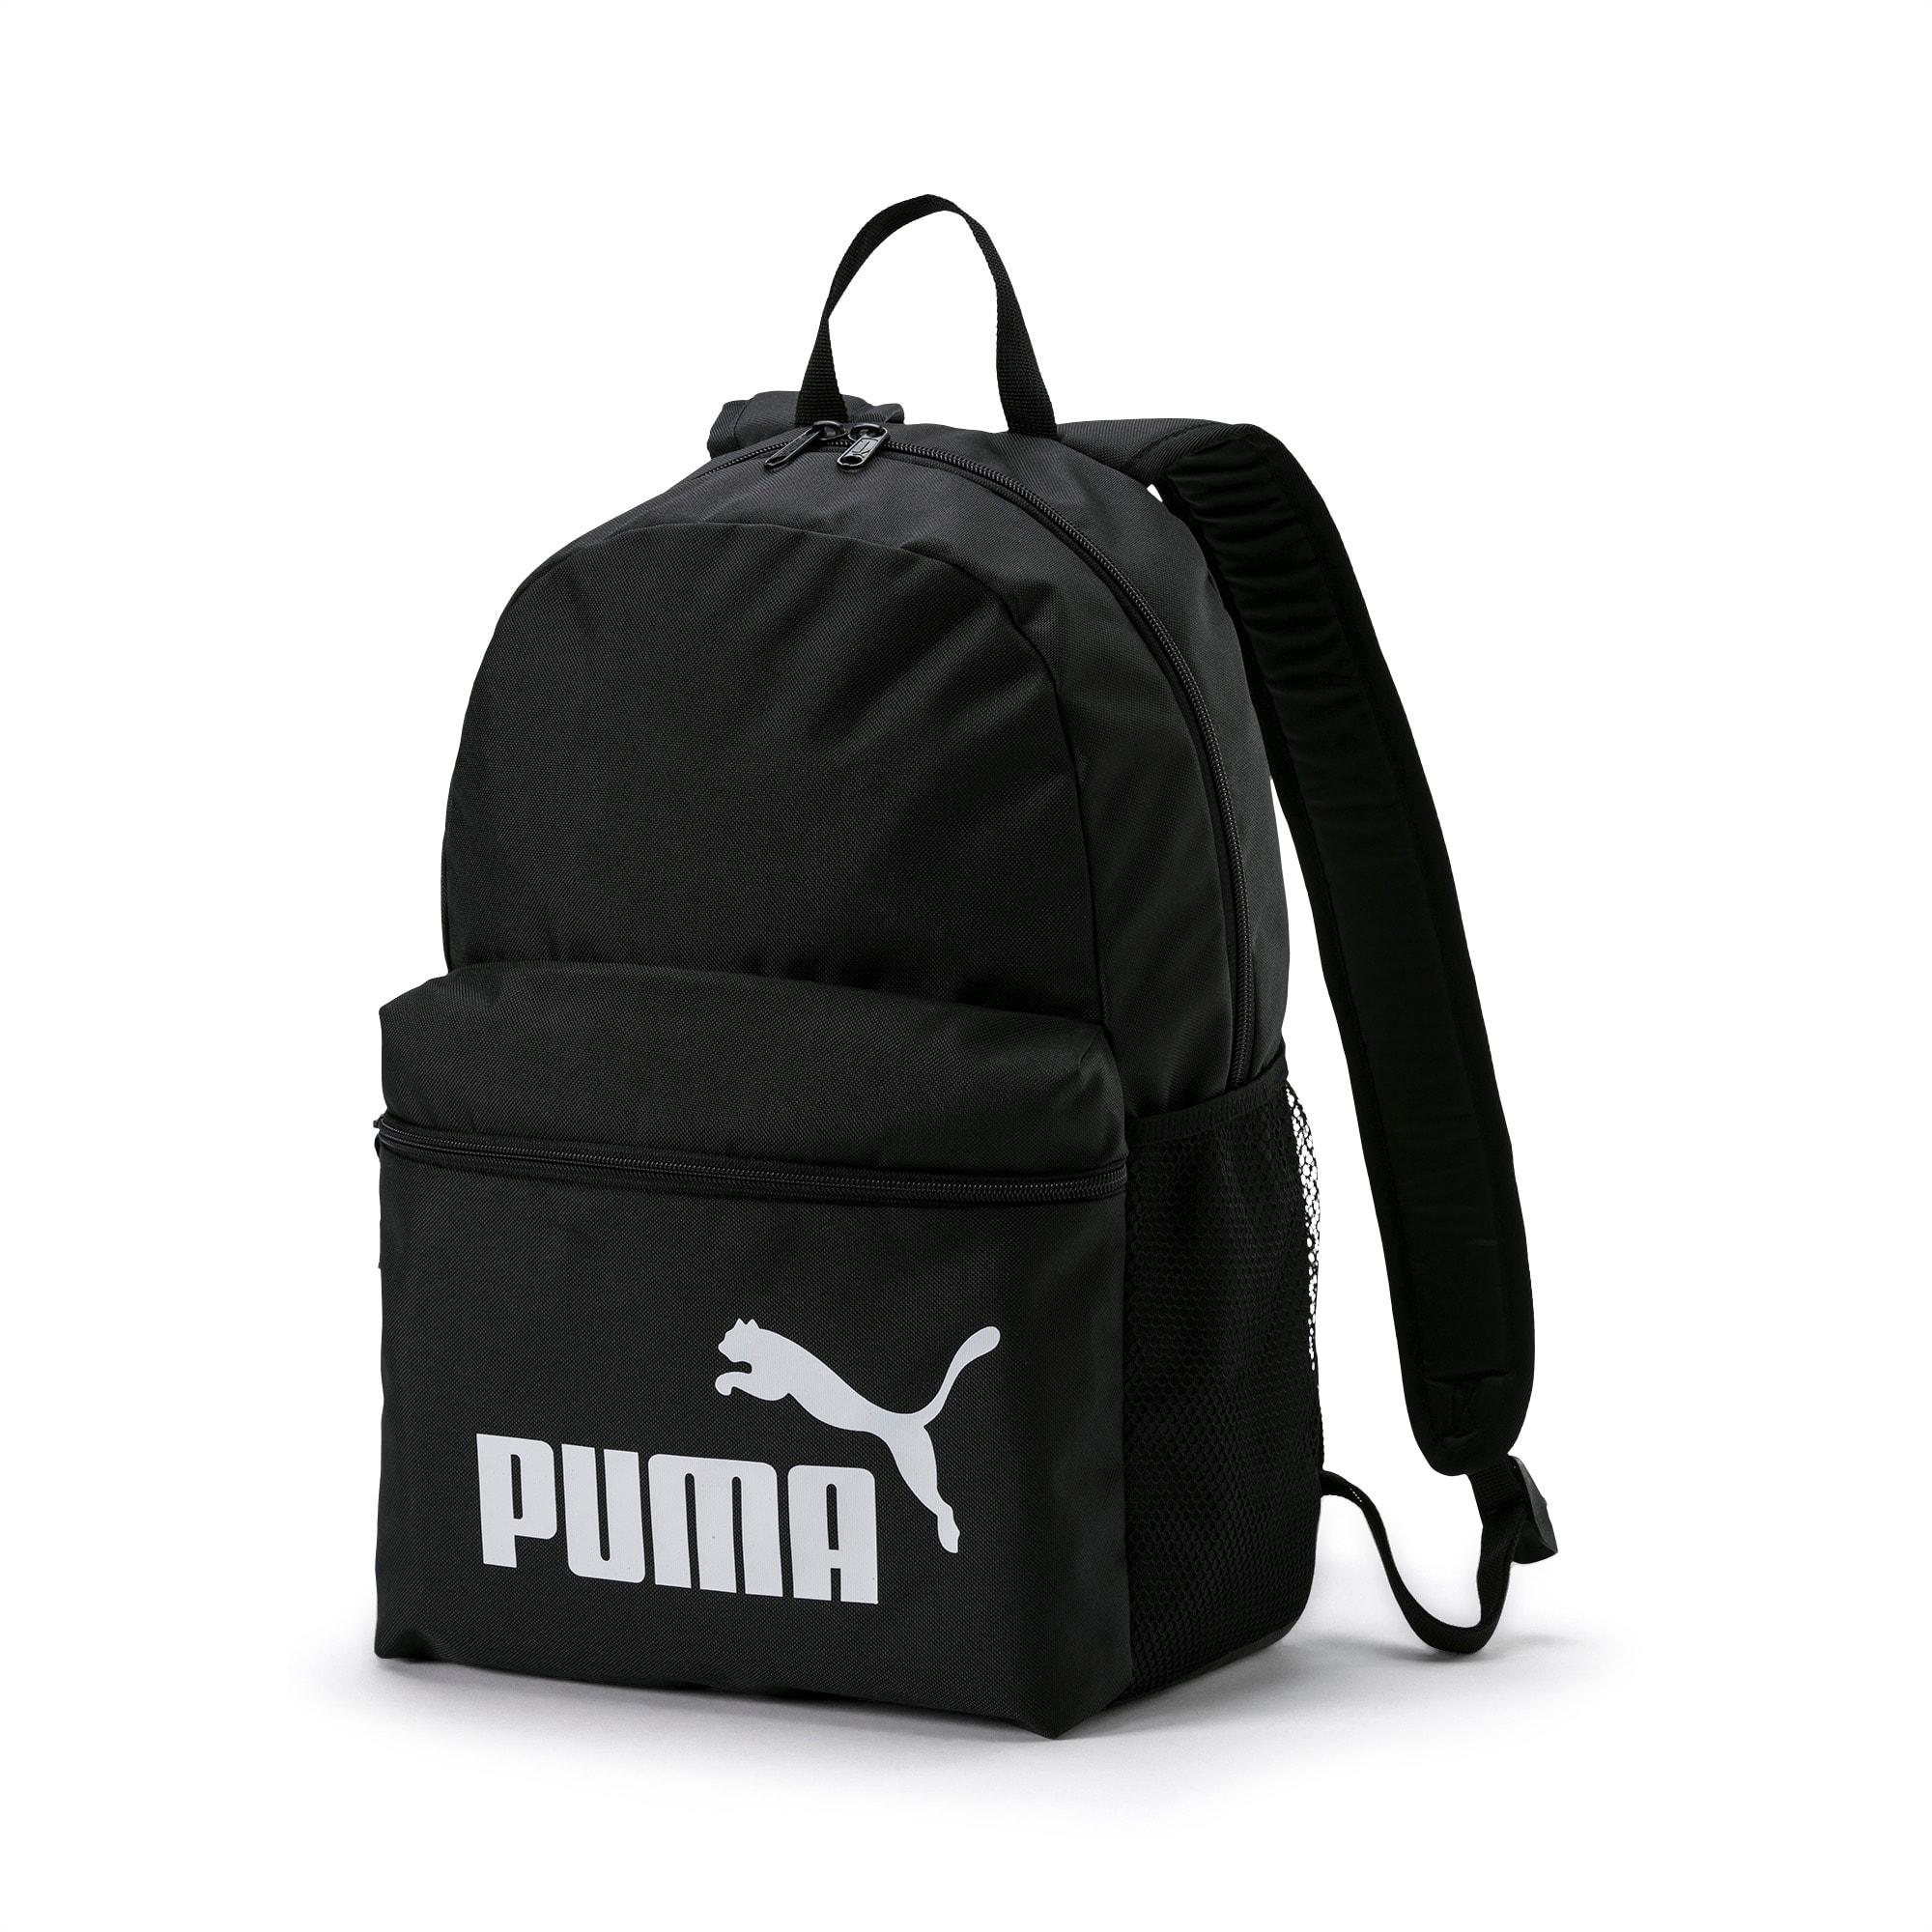 Buy Puma Backpacks Online | lazada.com.ph